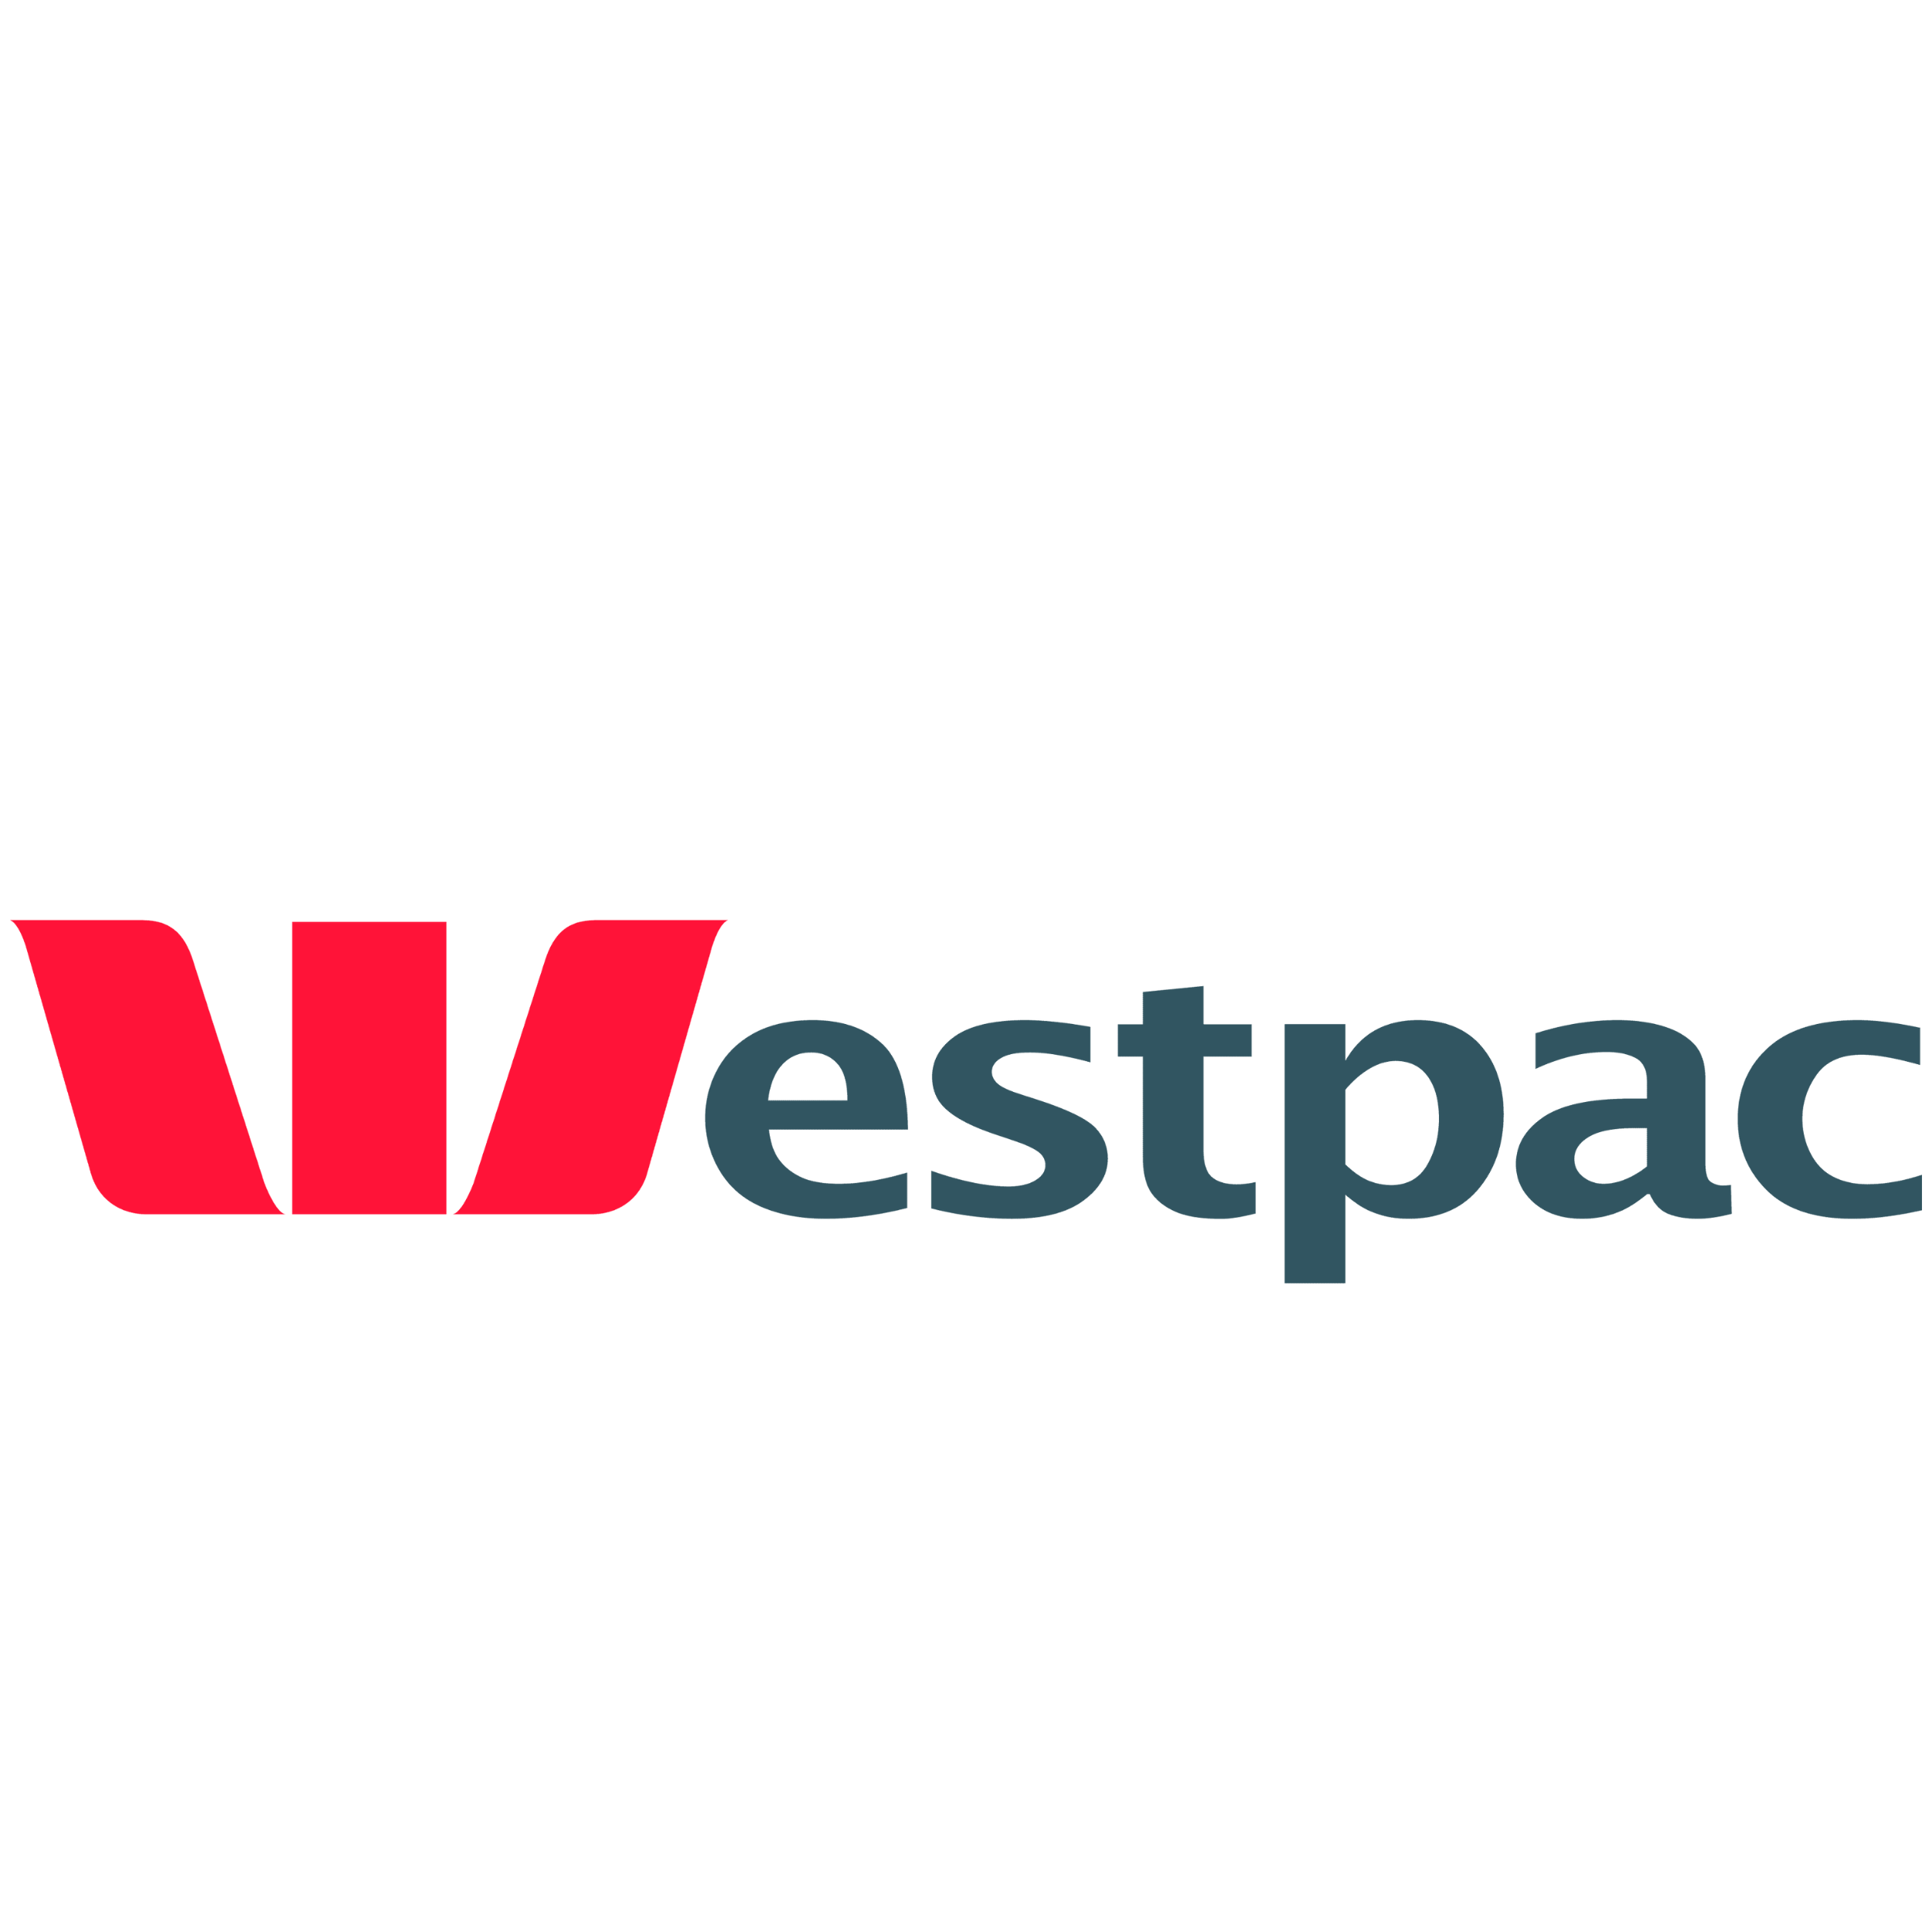 Westpac : Brand Short Description Type Here.